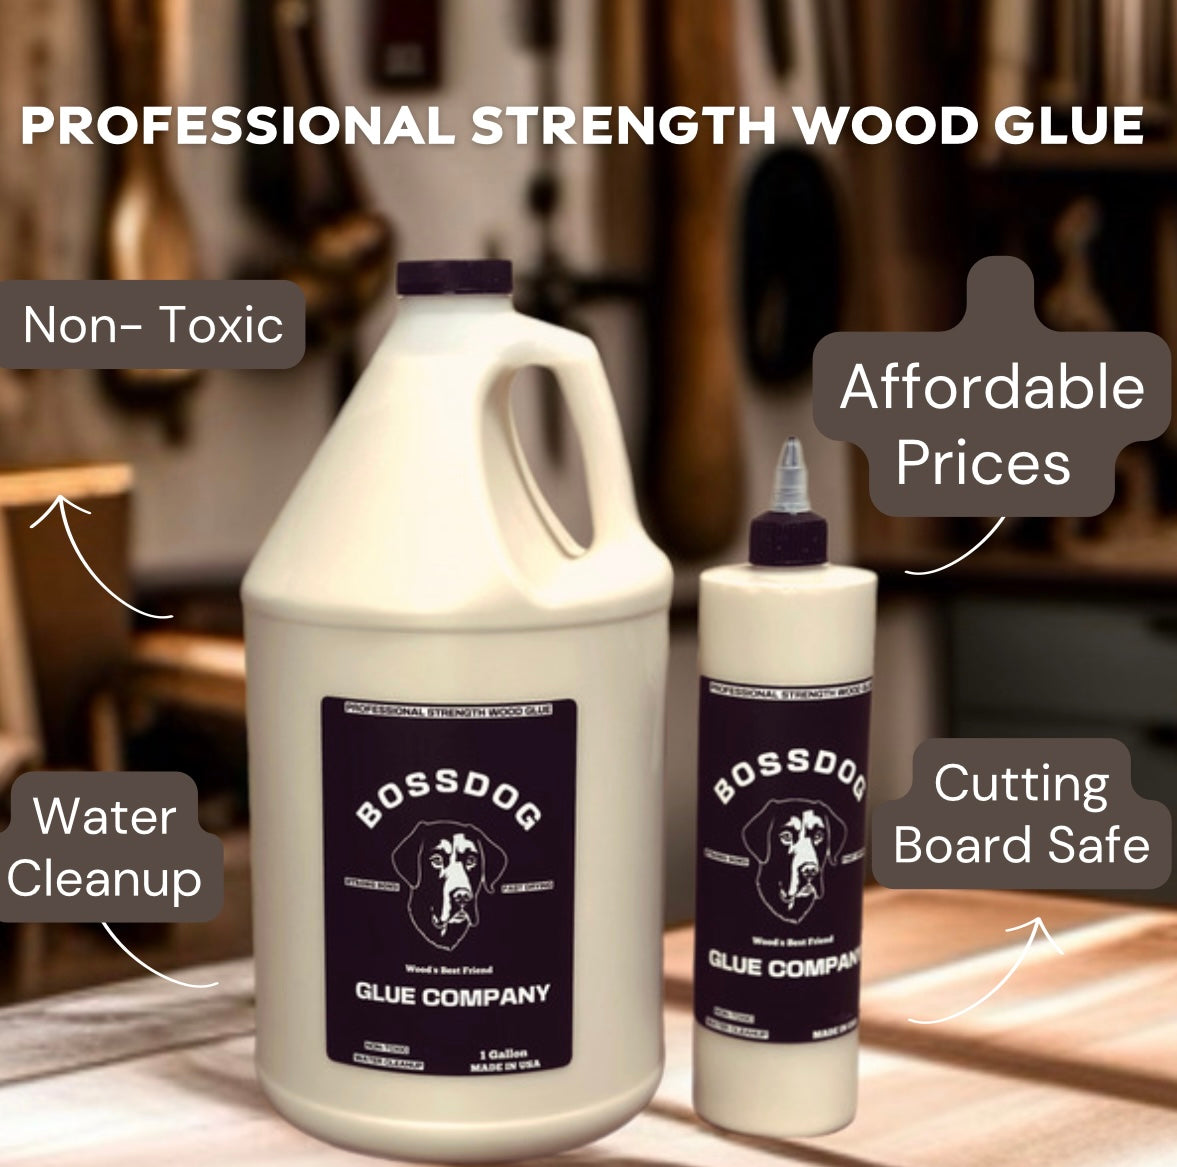 Boss Dog Profesional Strength Wood Glue 1 Gallon